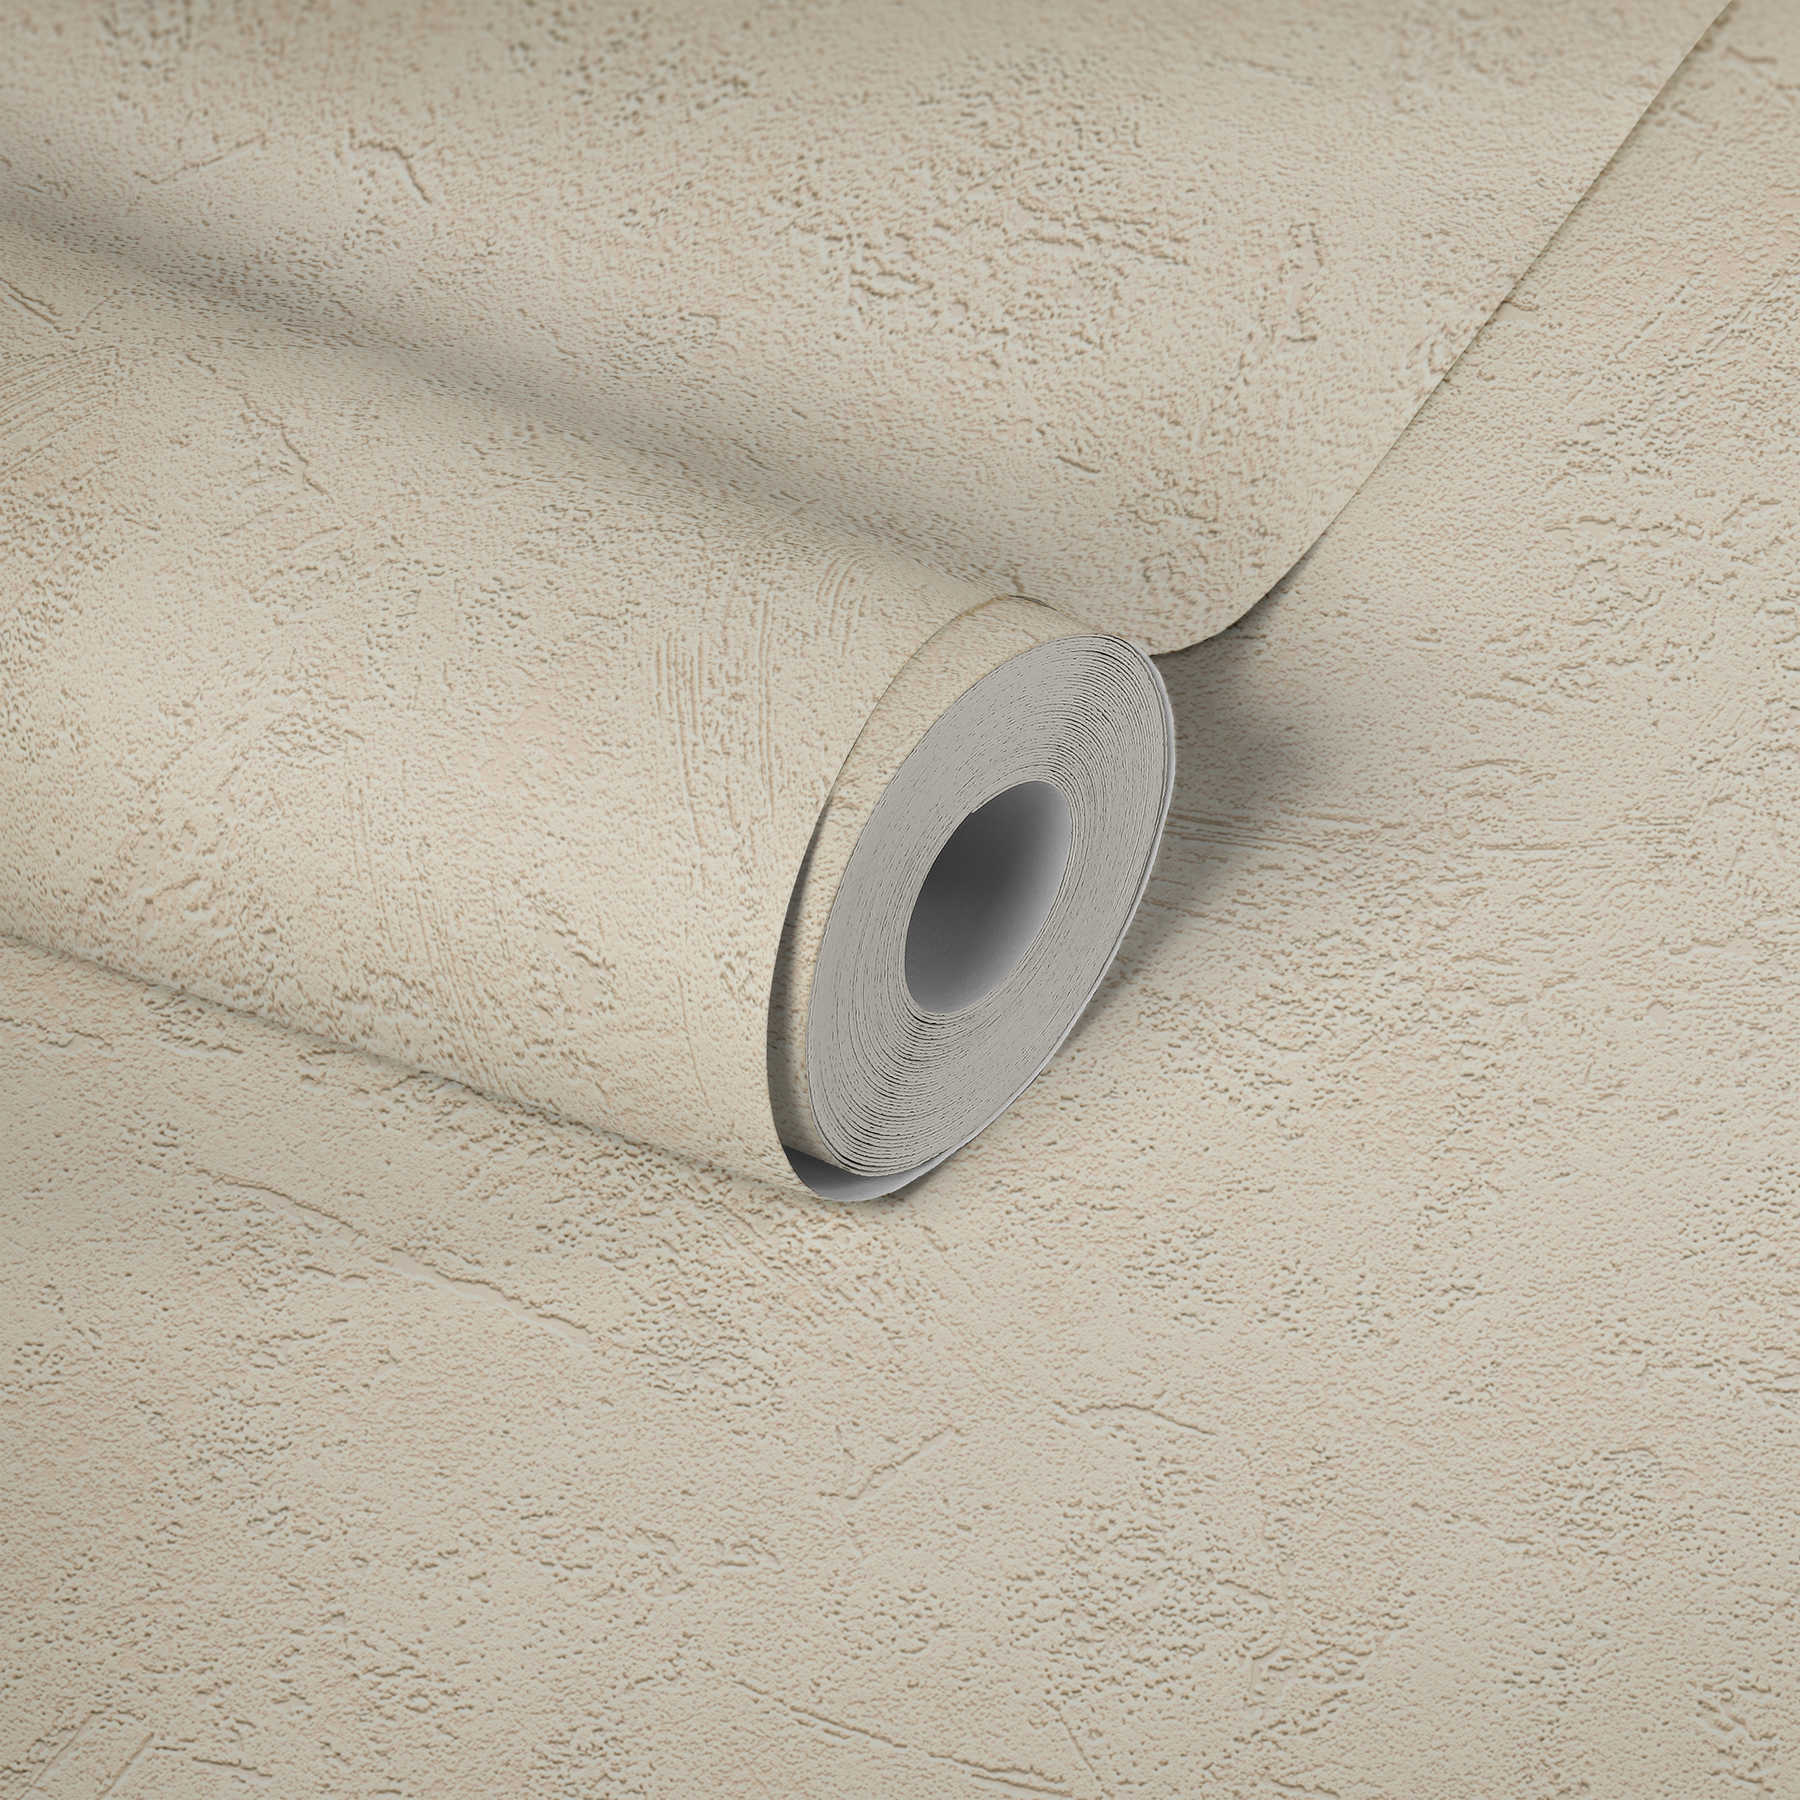             Plaster look wallpaper with wipe plaster texture pattern - cream
        